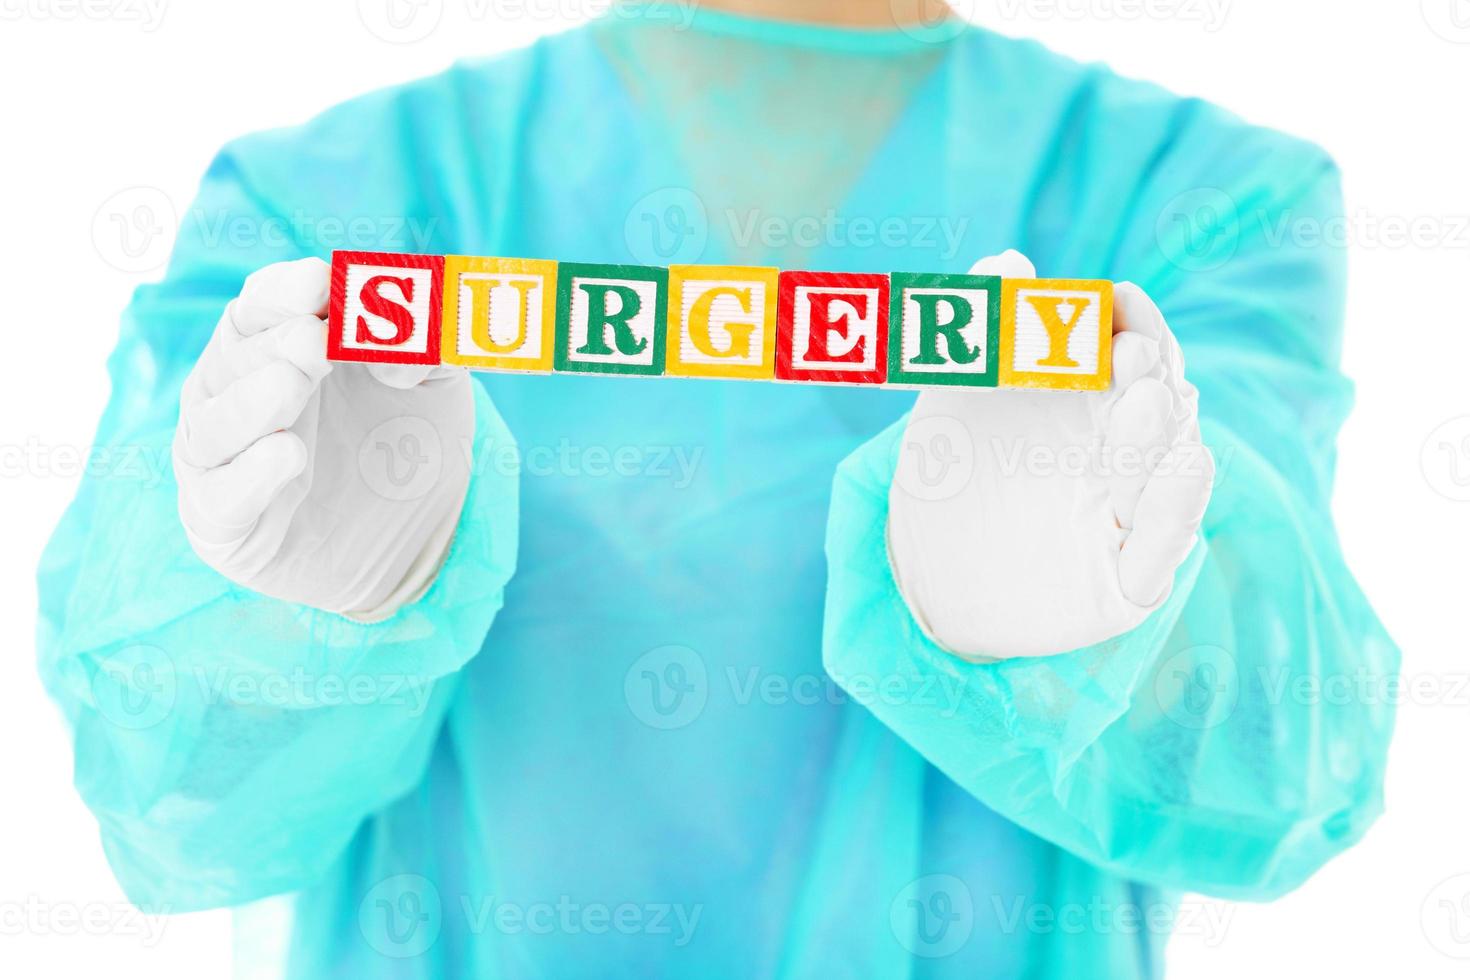 Surgery block letters photo